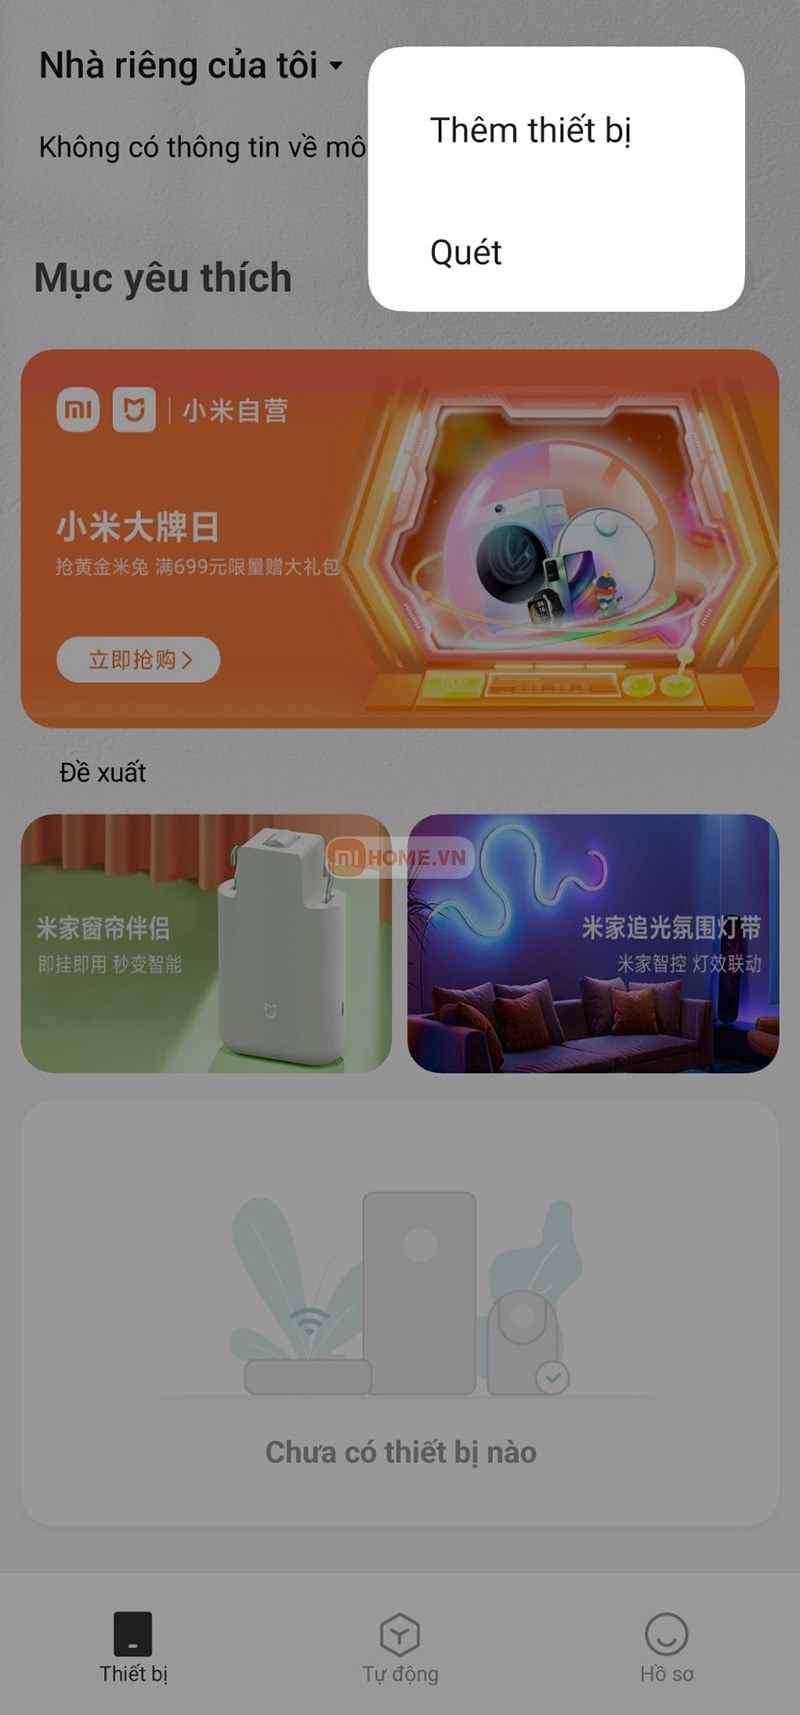 Huong dan ket noi quat Xiaomi 2